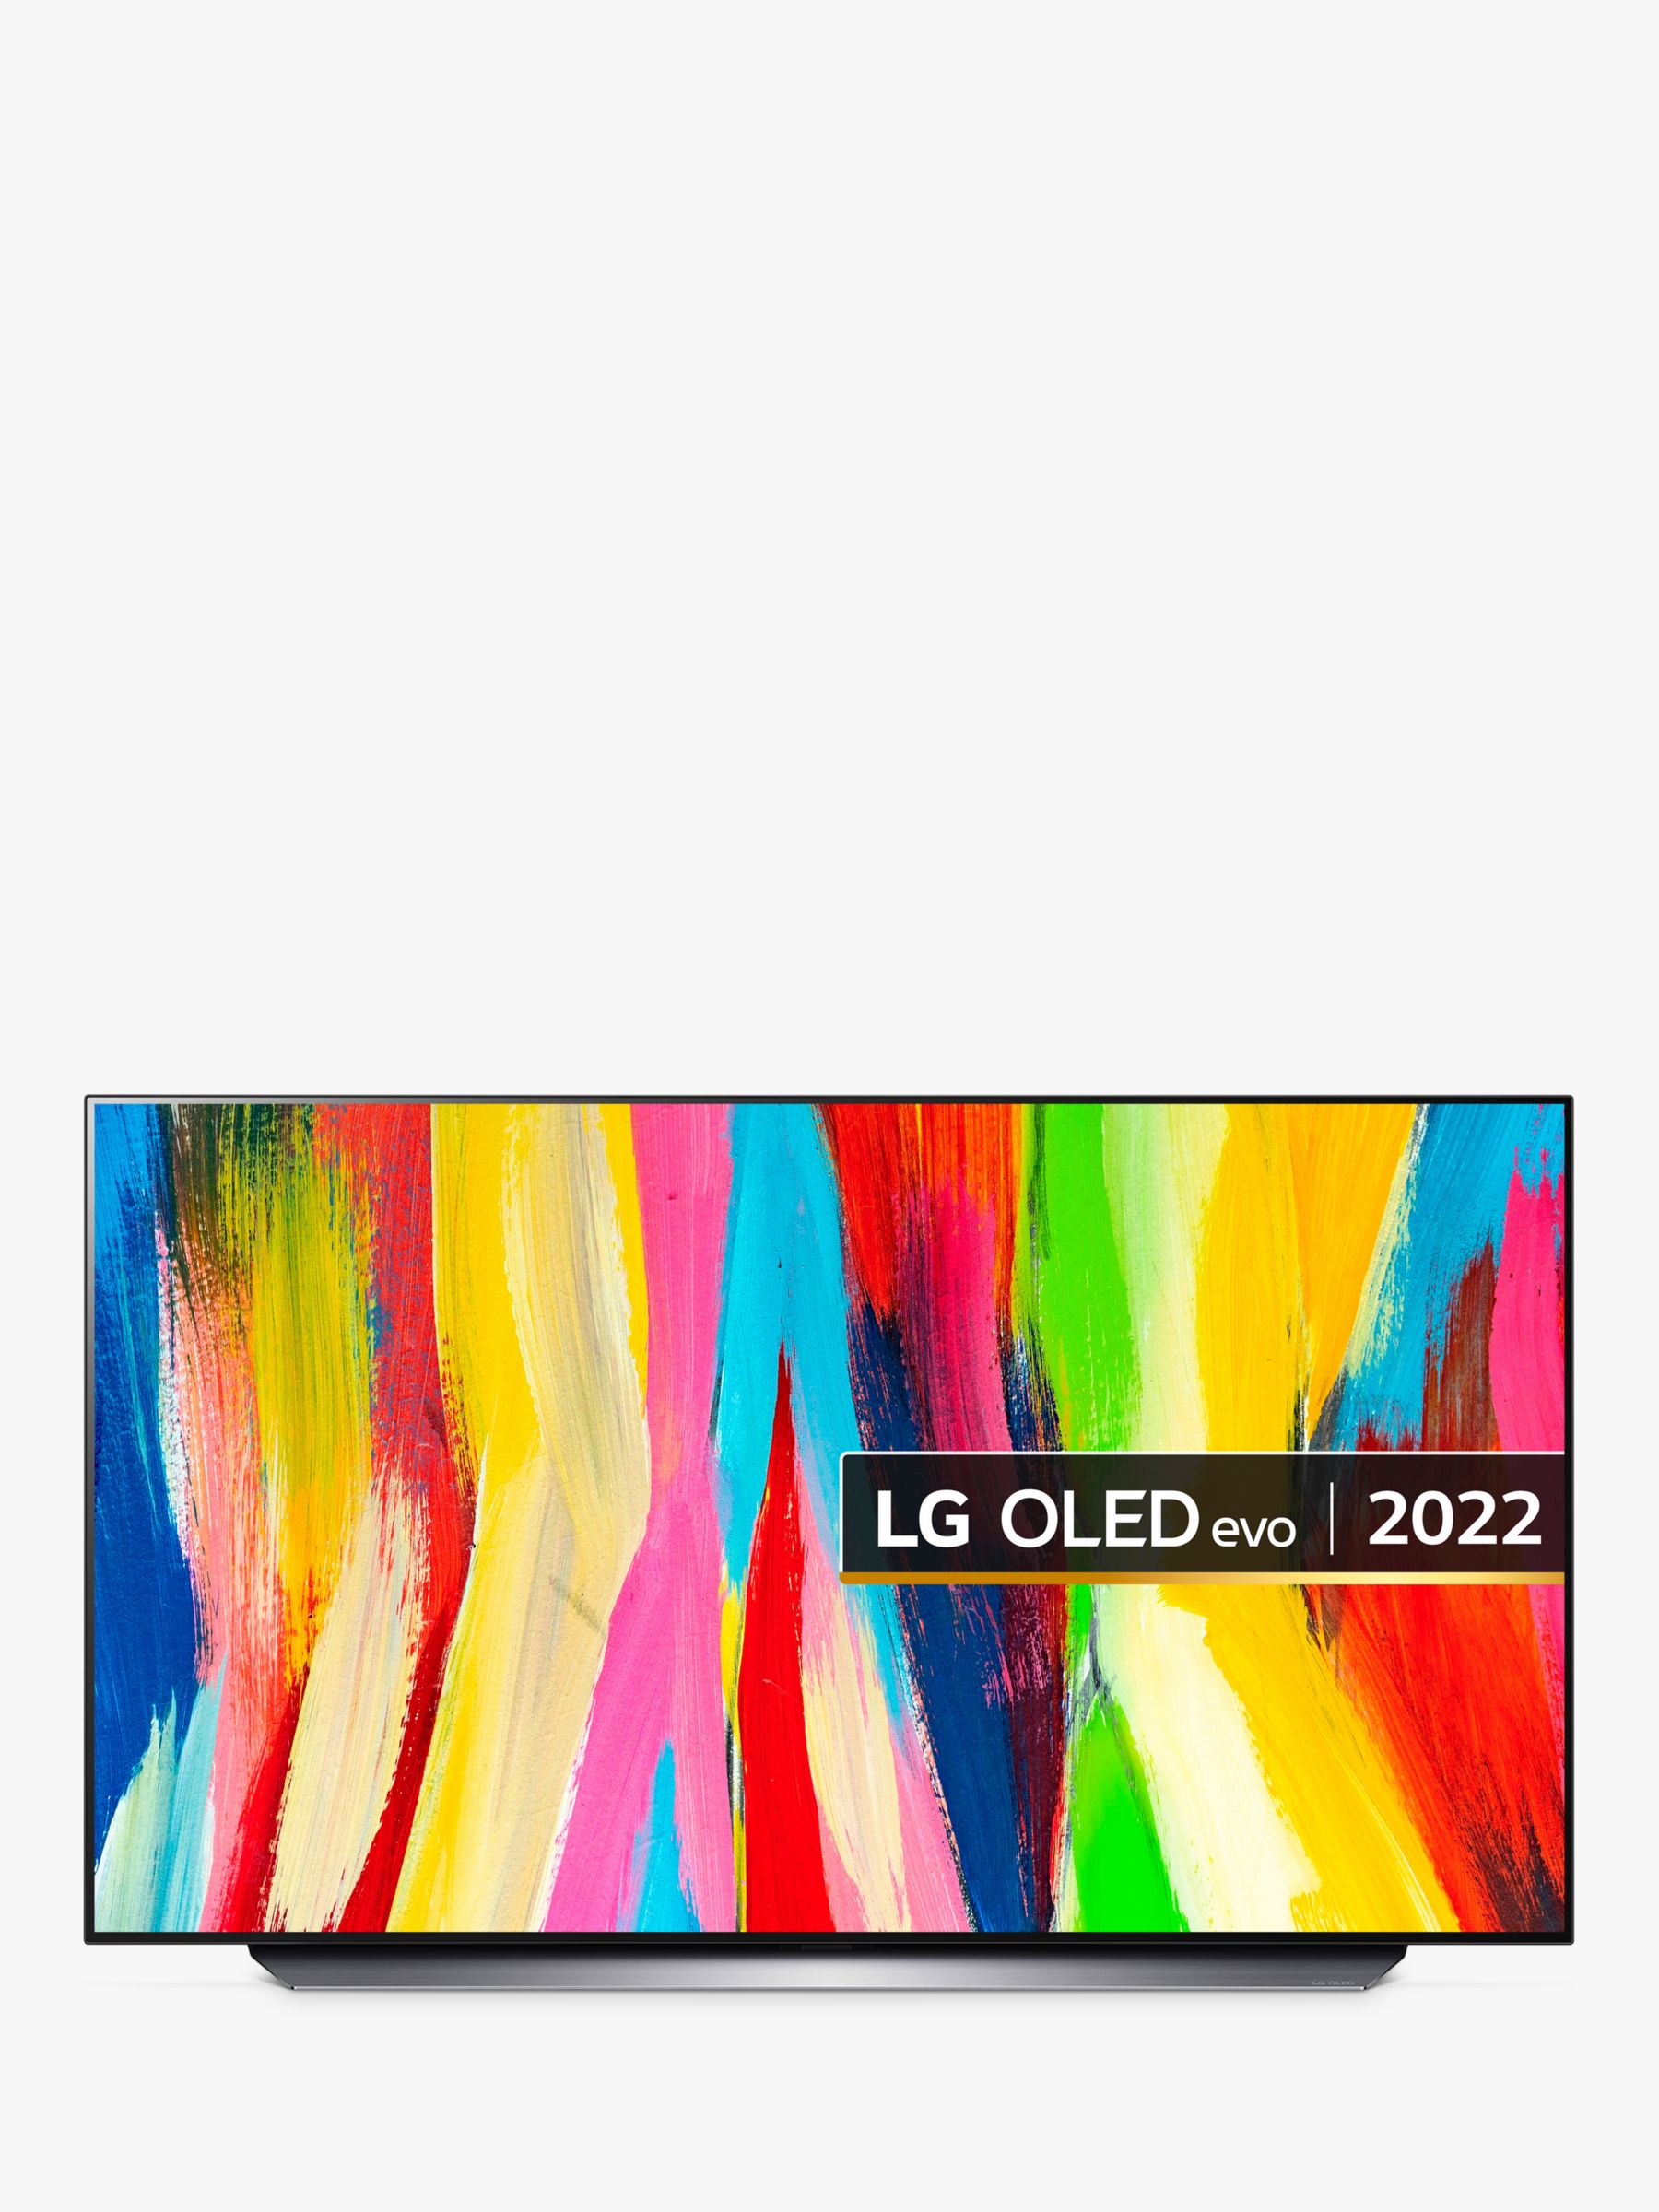 LG UHD UR73 50 inch 4K Smart TV, 2023